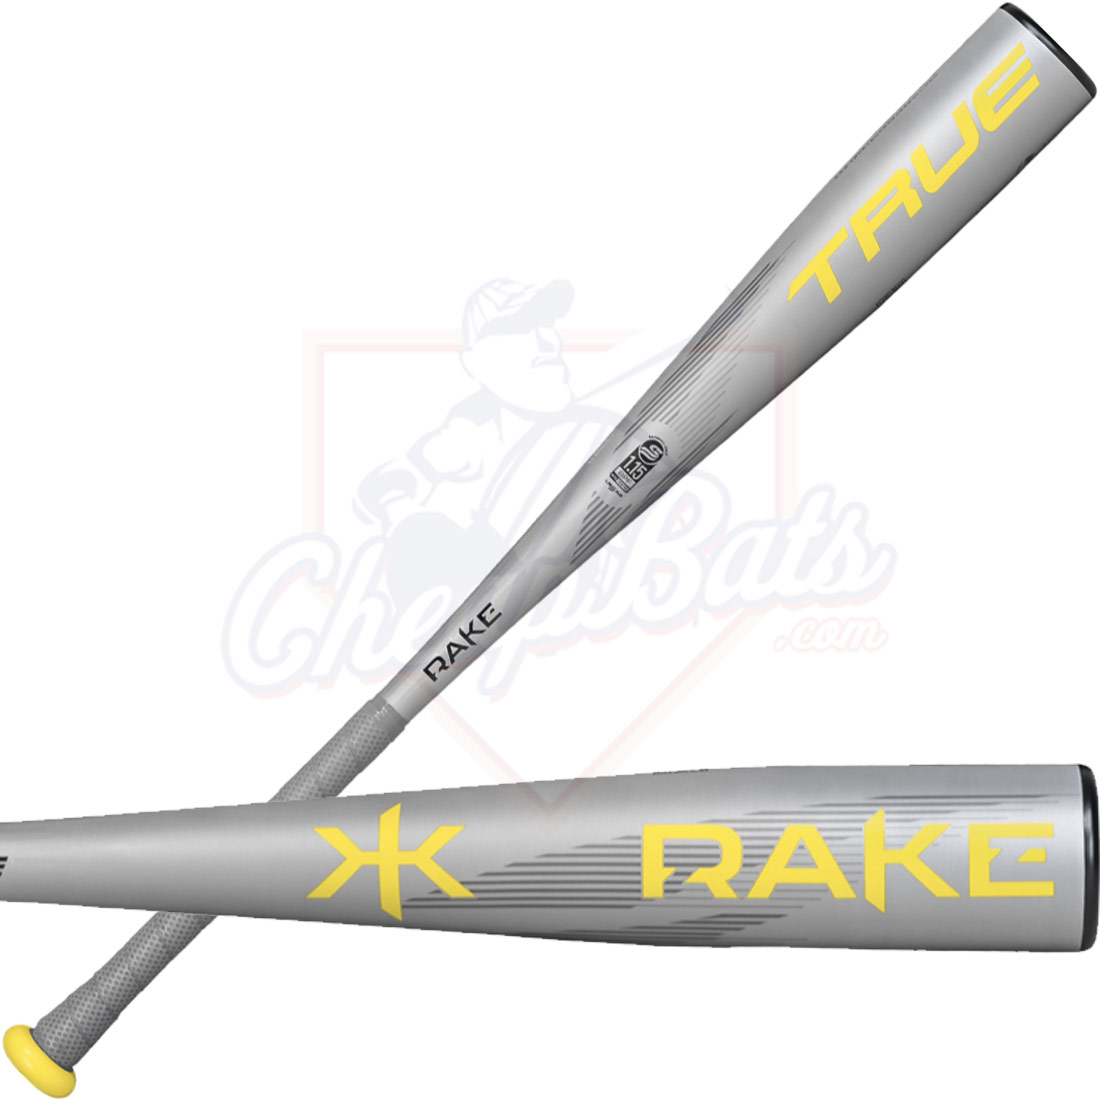 True Temper Rake Youth USSSA Baseball Bat -10oz UT-22-RKE-X-10